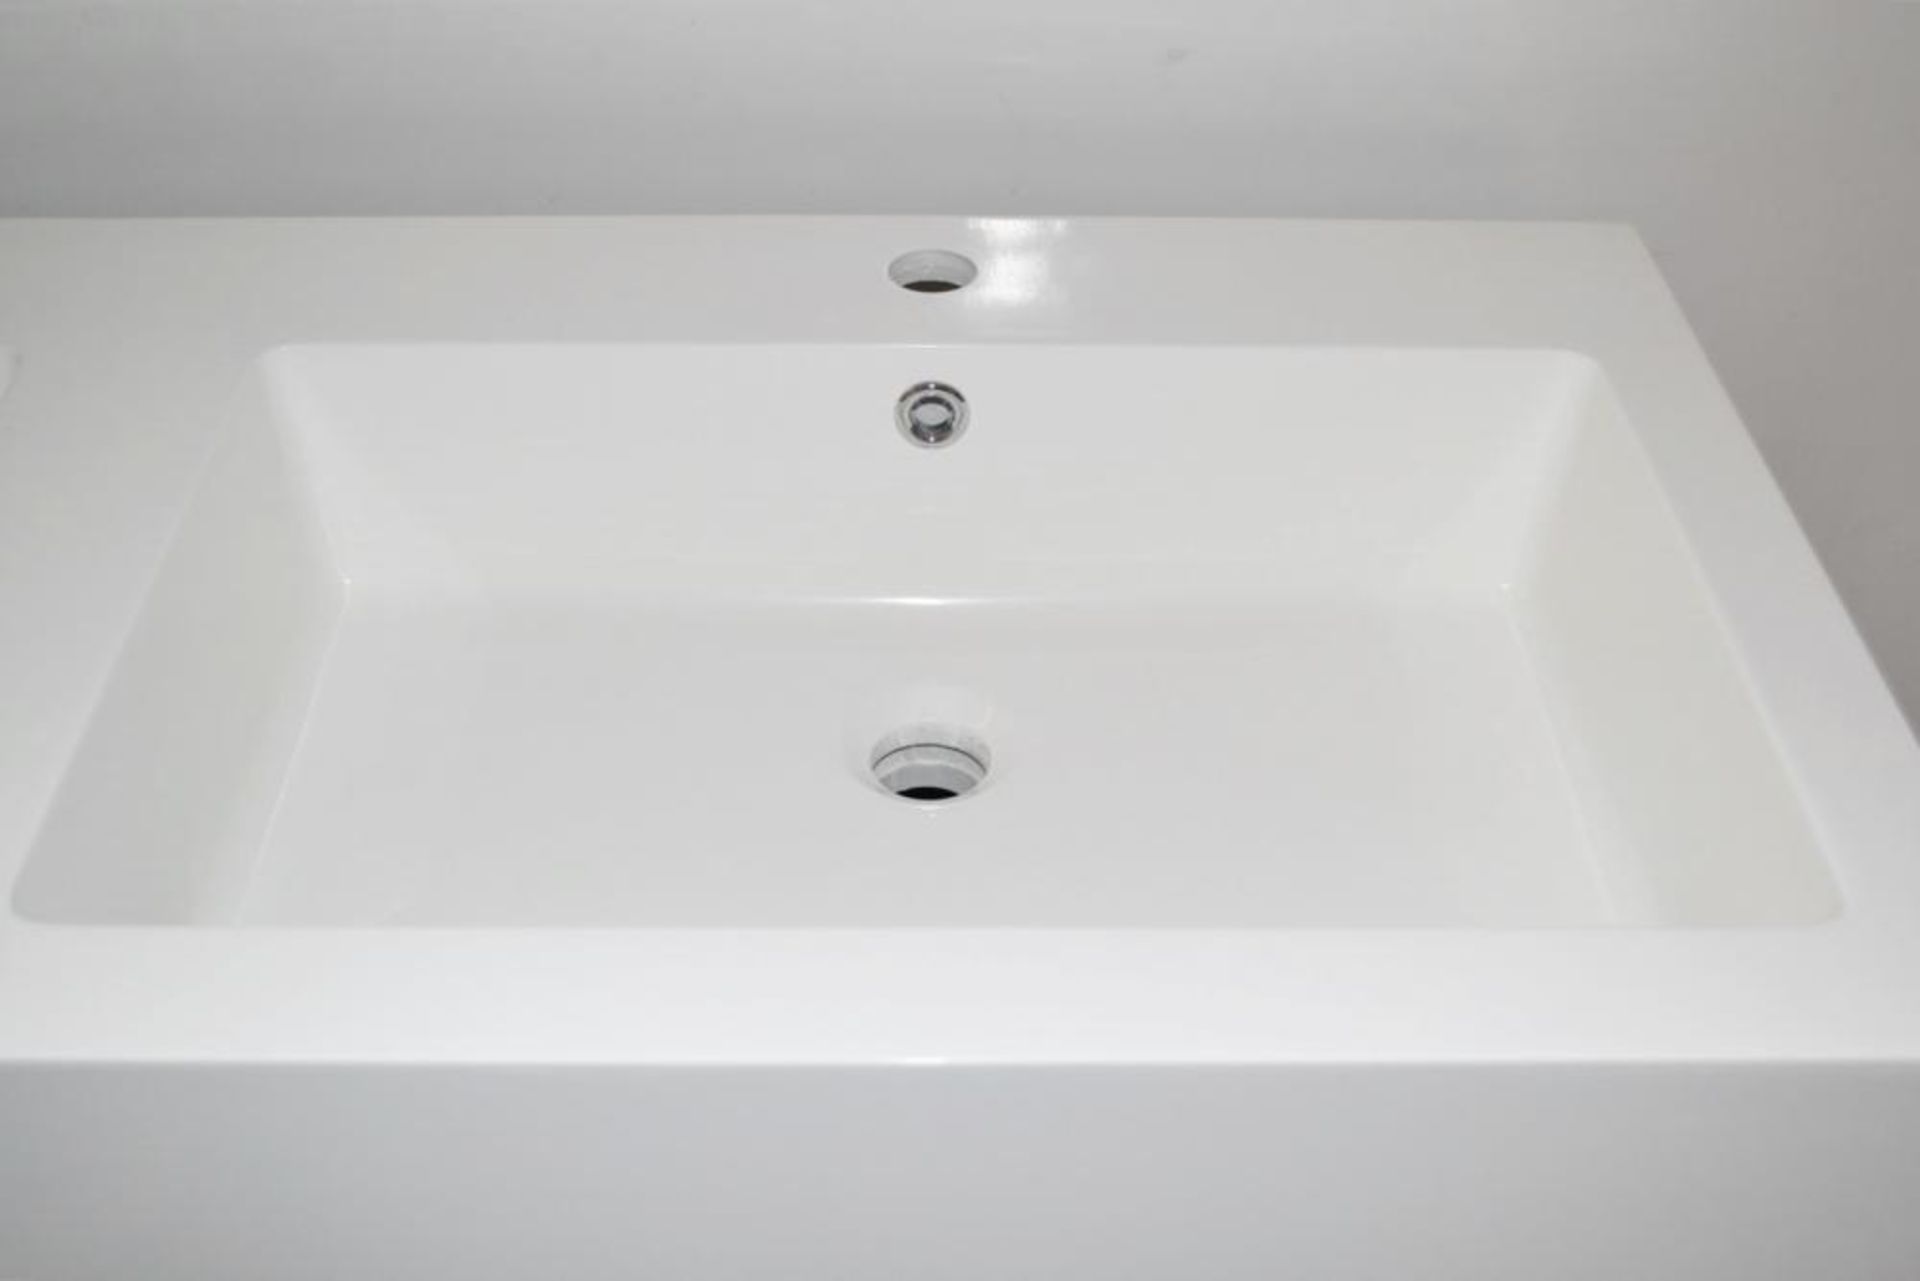 JOB LOT of 10 x Gloss White 1200mm 4-Door Double Basin Freestanding Bathroom Cabinets - New & - Image 3 of 7